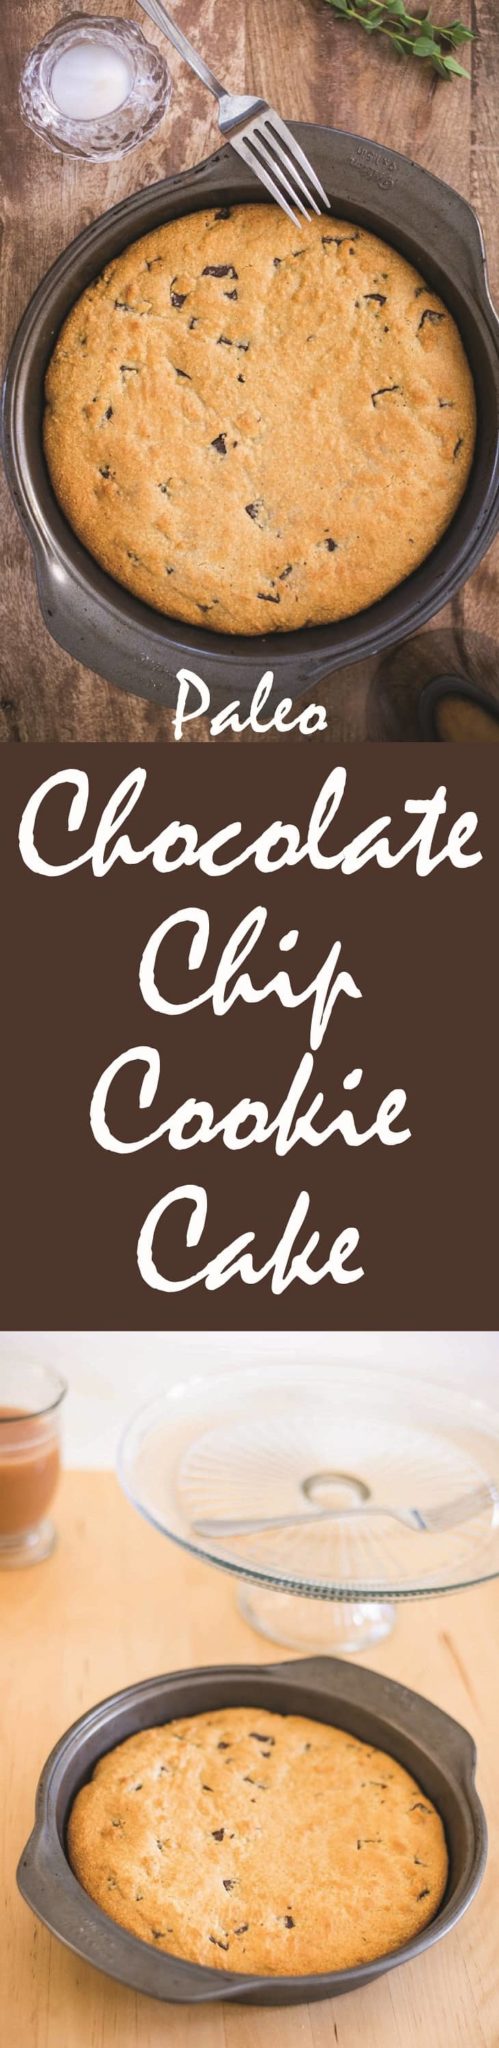 Paleo Chocolate Chip Cookie Cake Recipe #paleo #dessert #recipes - https://paleoflourish.com/paleo-chocolate-chip-cookie-cake-recipe